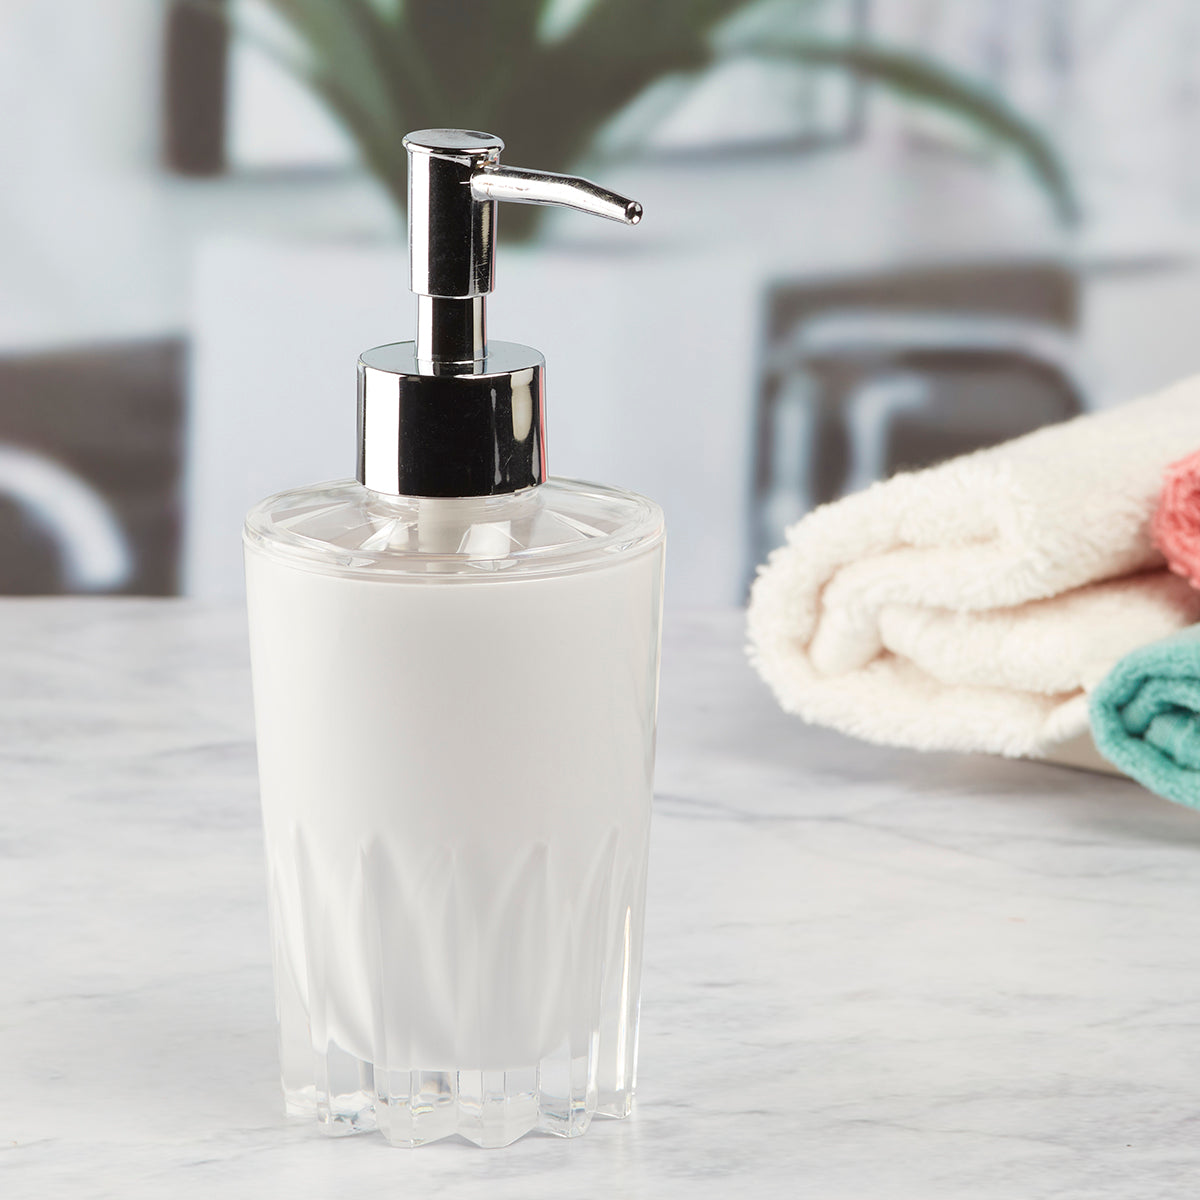 Kookee Acrylic Liquid Handwash Soap Dispenser pump for Bathroom, Hand wash refillable bottle for Kitchen wash basin, Set of 1 (8457)